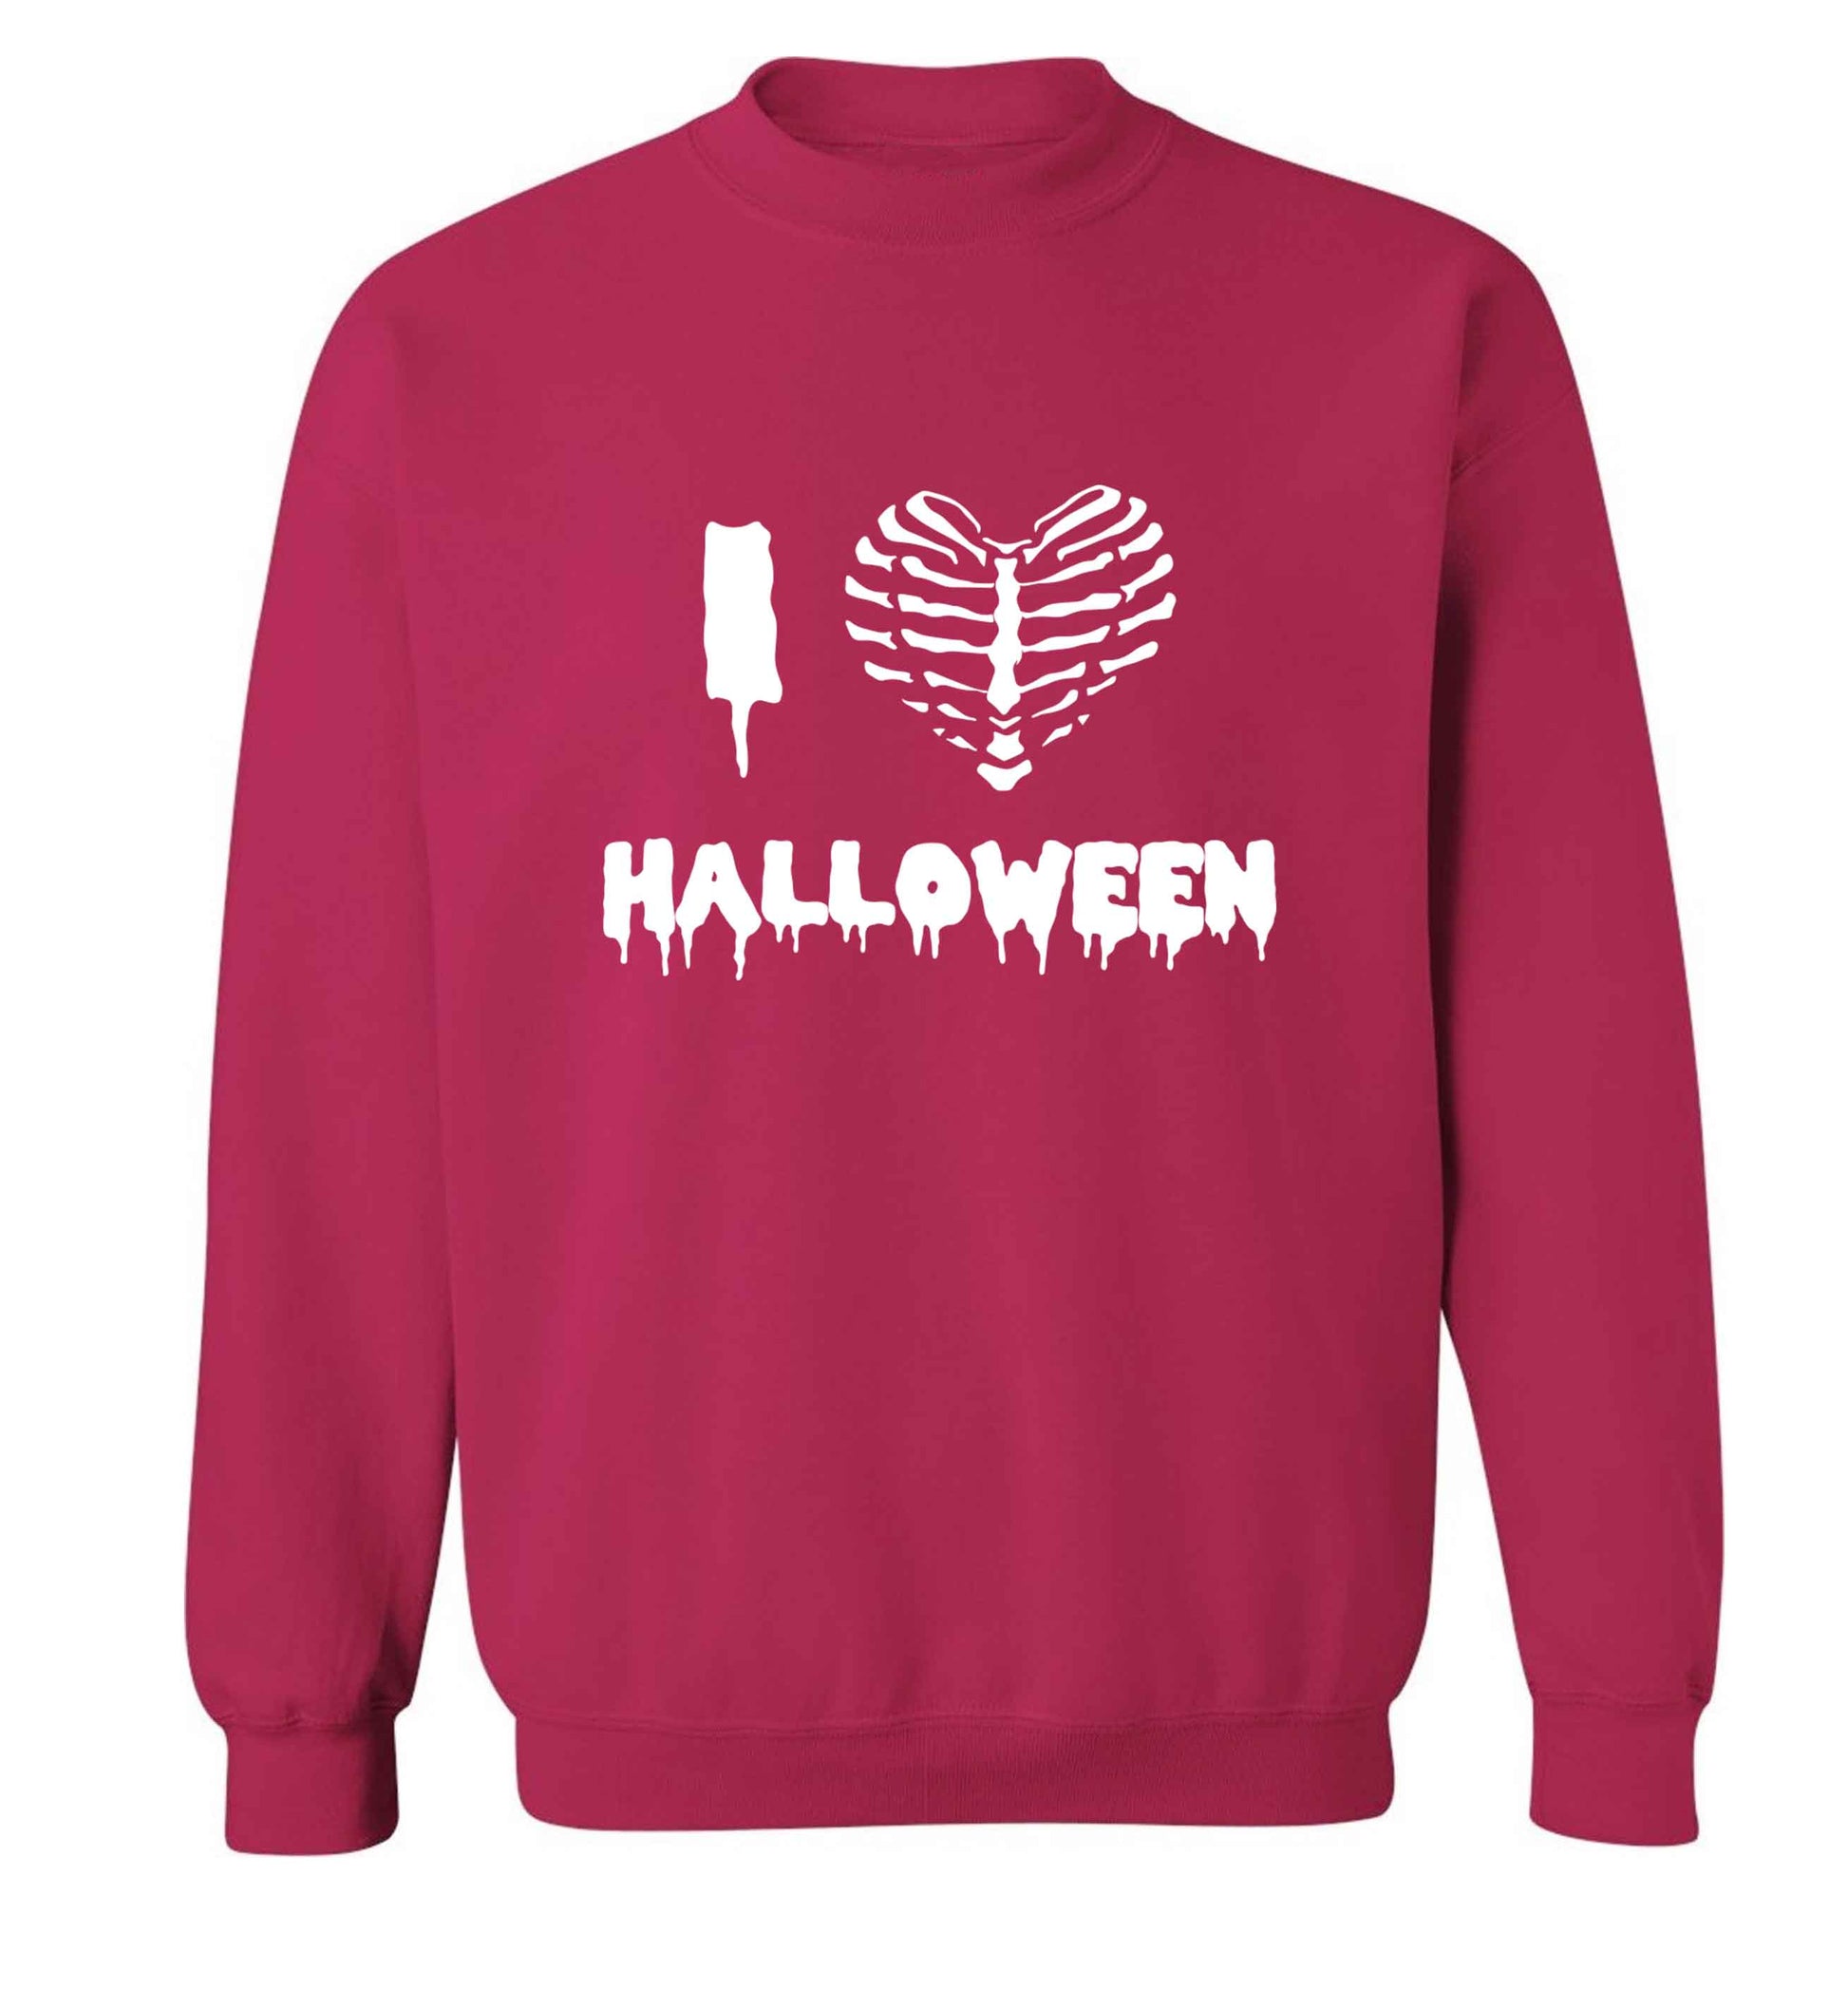 I love halloween adult's unisex pink sweater 2XL